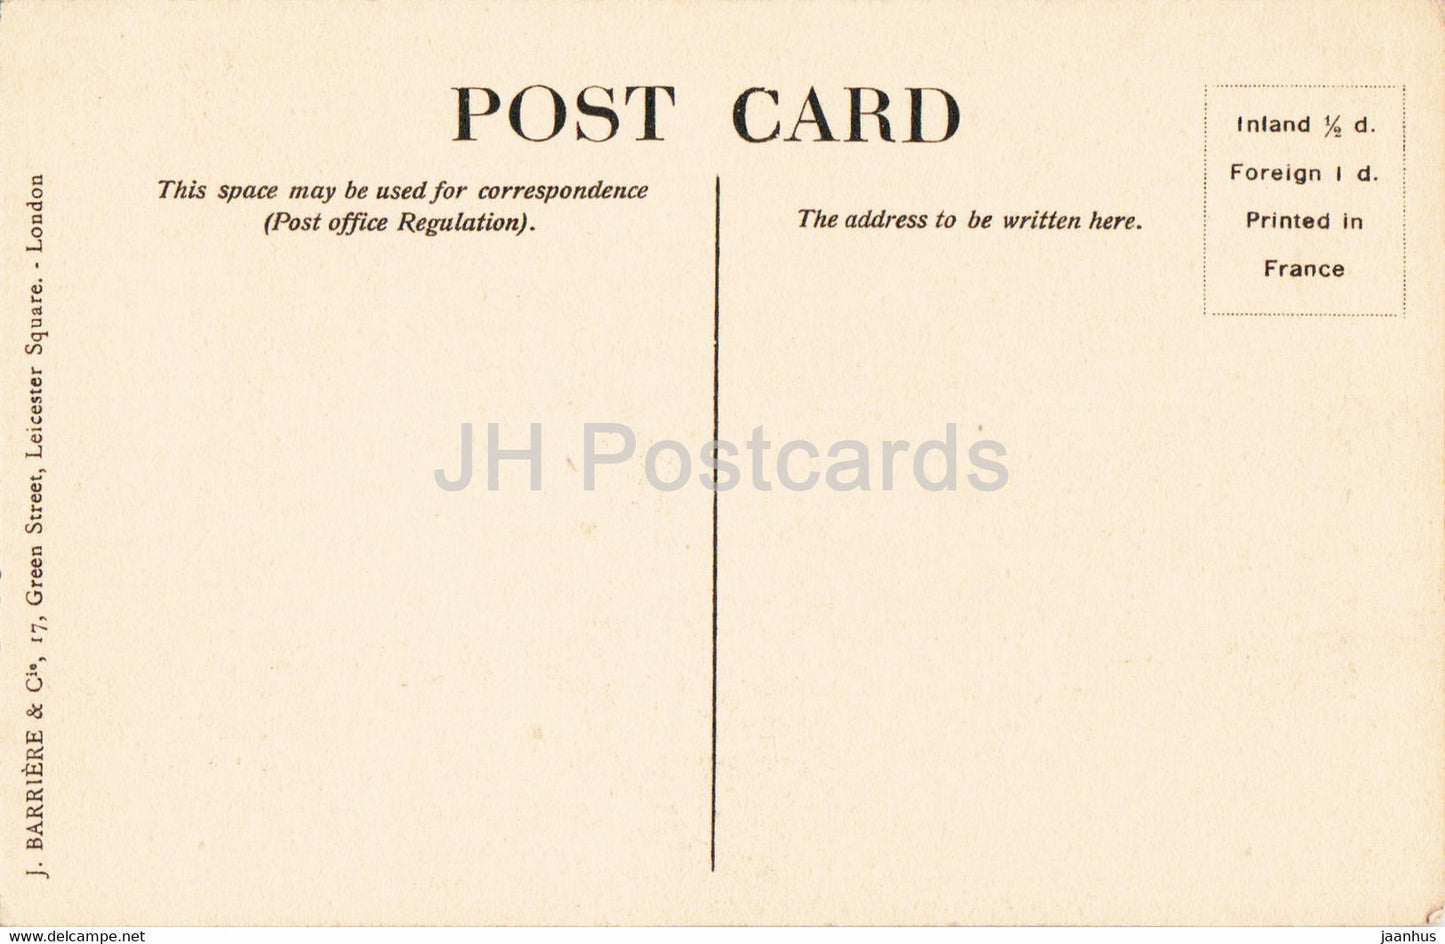 London - Westminster Abbey - North West - old postcard - England - United Kingdom - unused